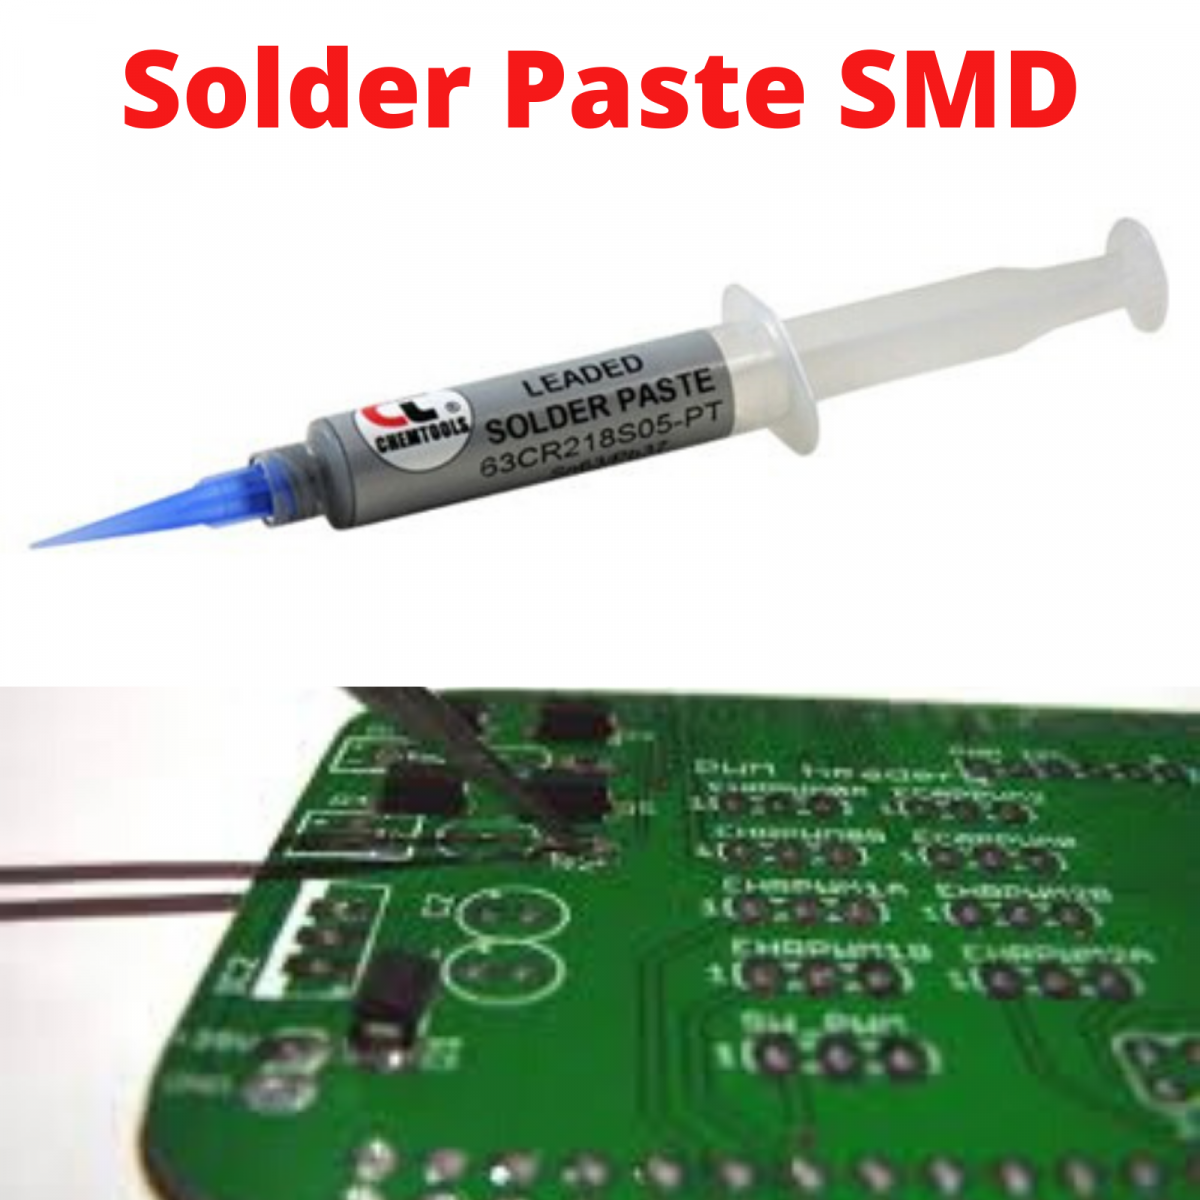 solder paste repair